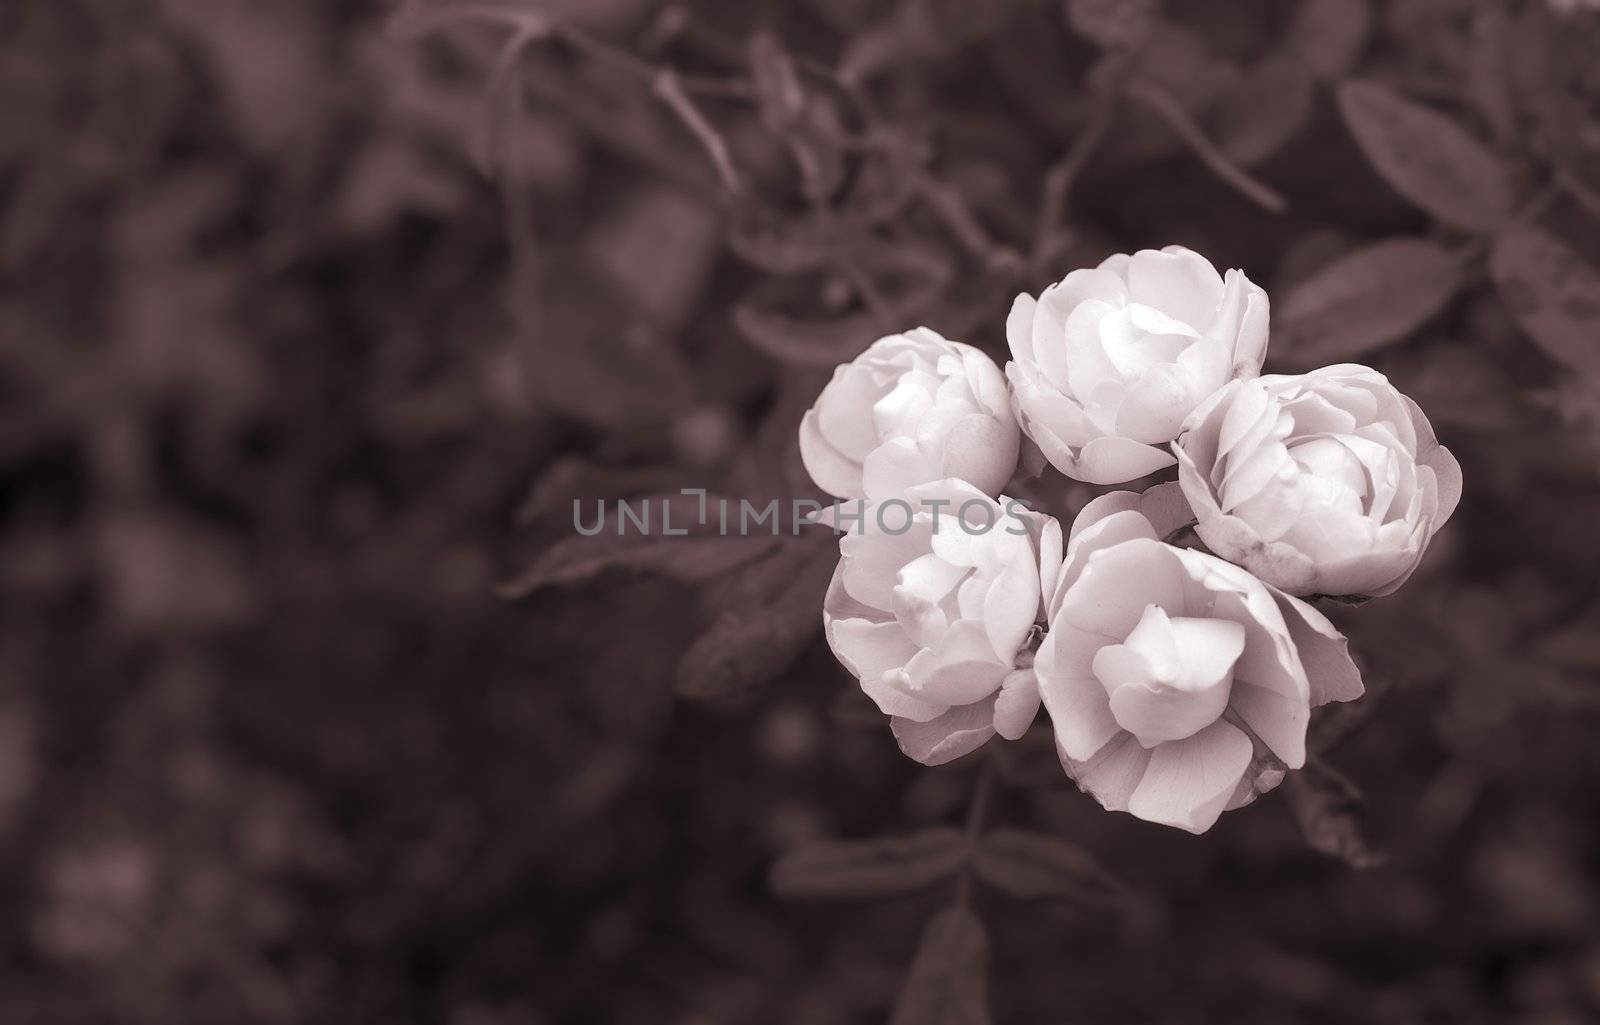 Five snow white rose by elwynn